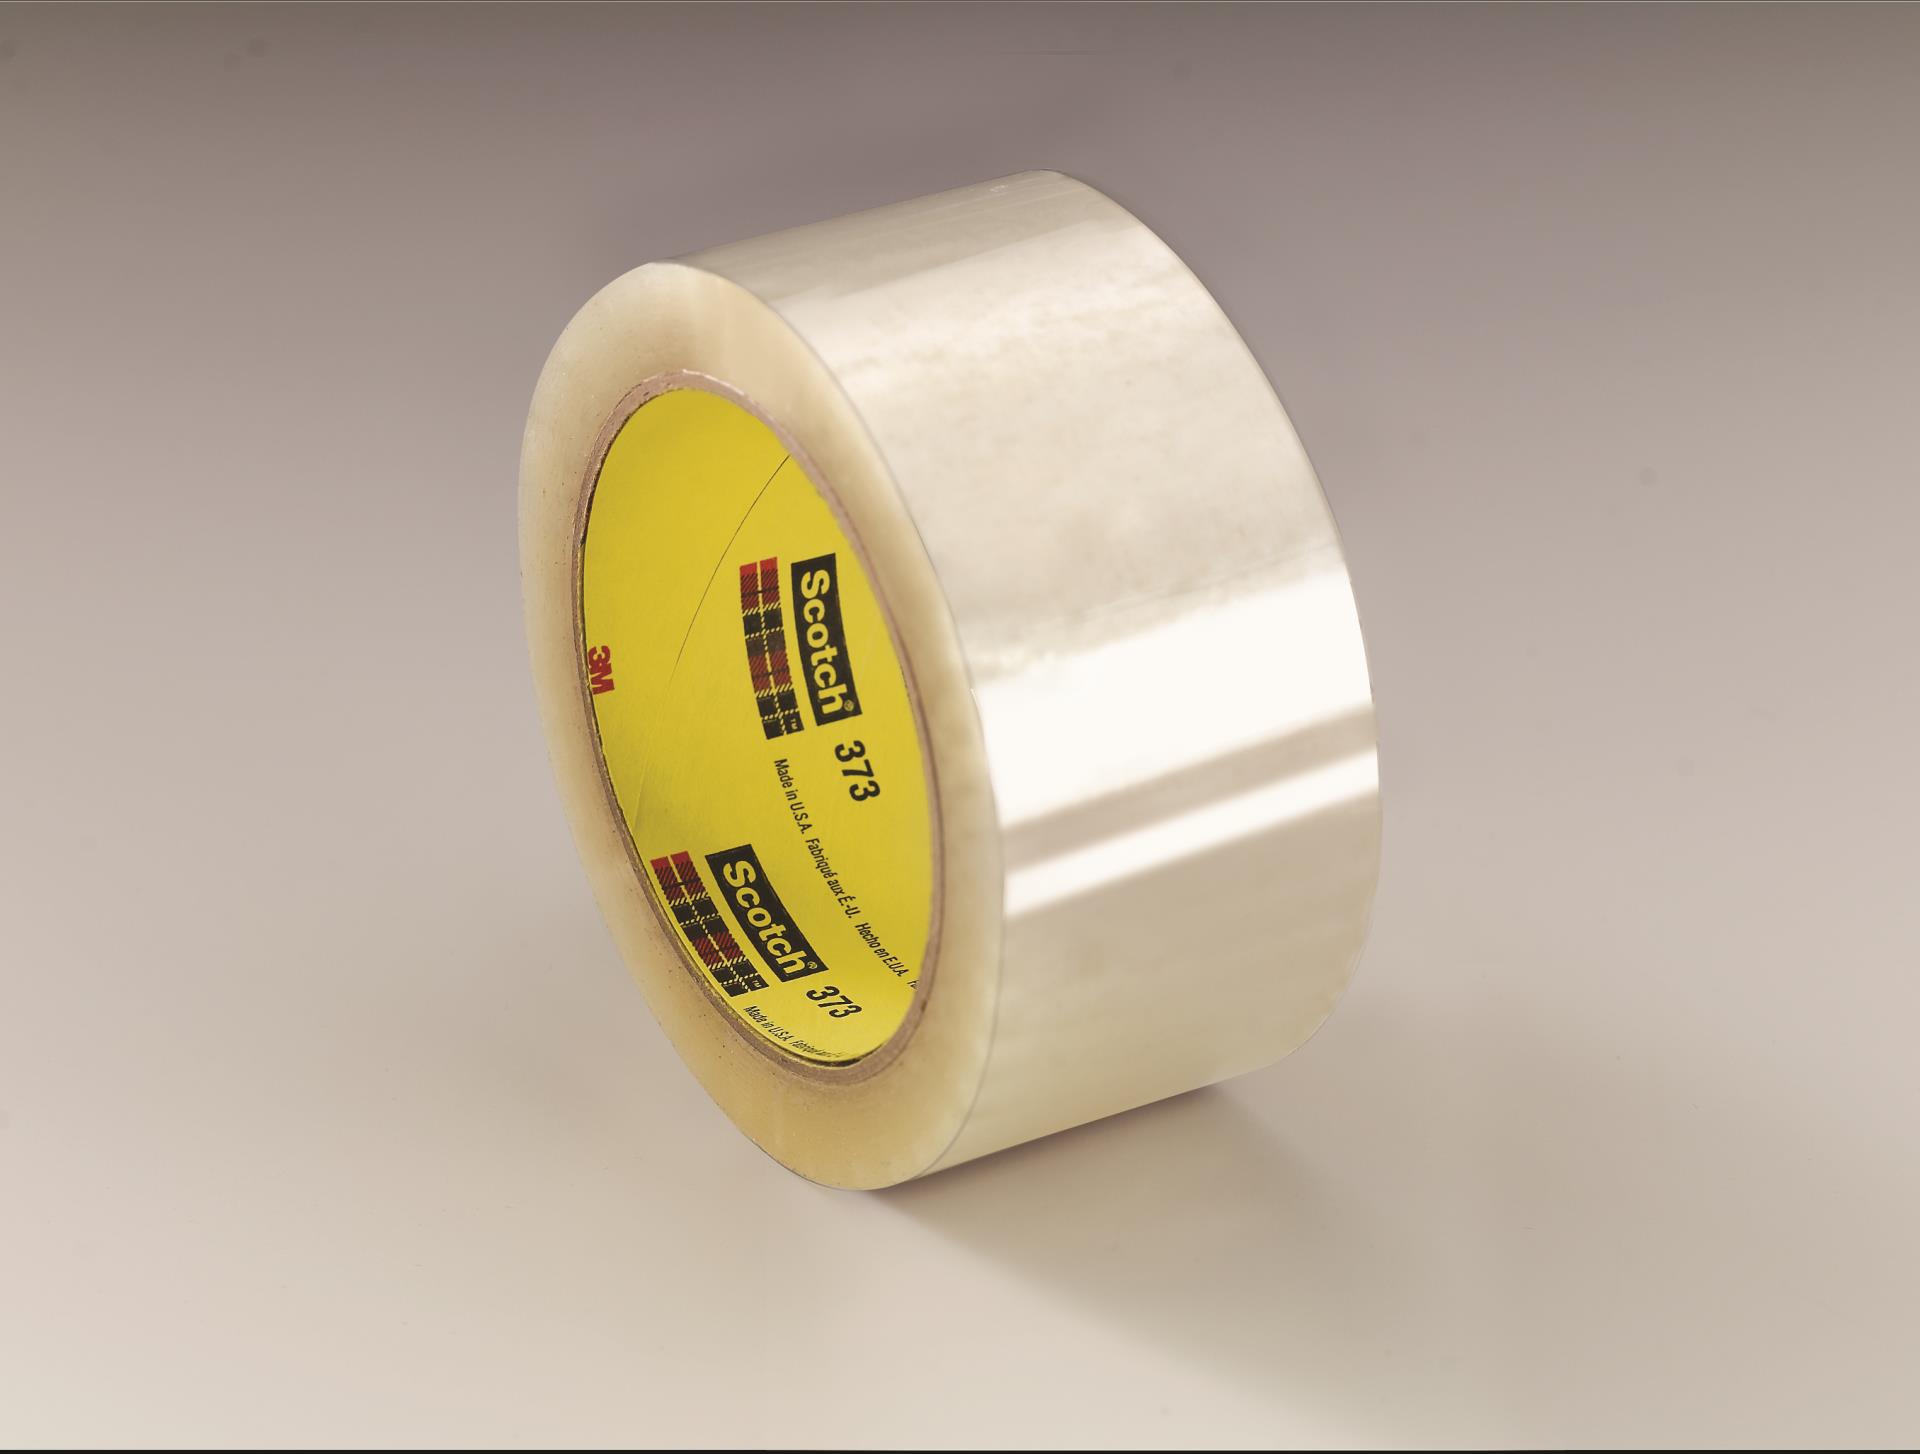 IT H 200 Pressure sealant carton tape six pack LOK 